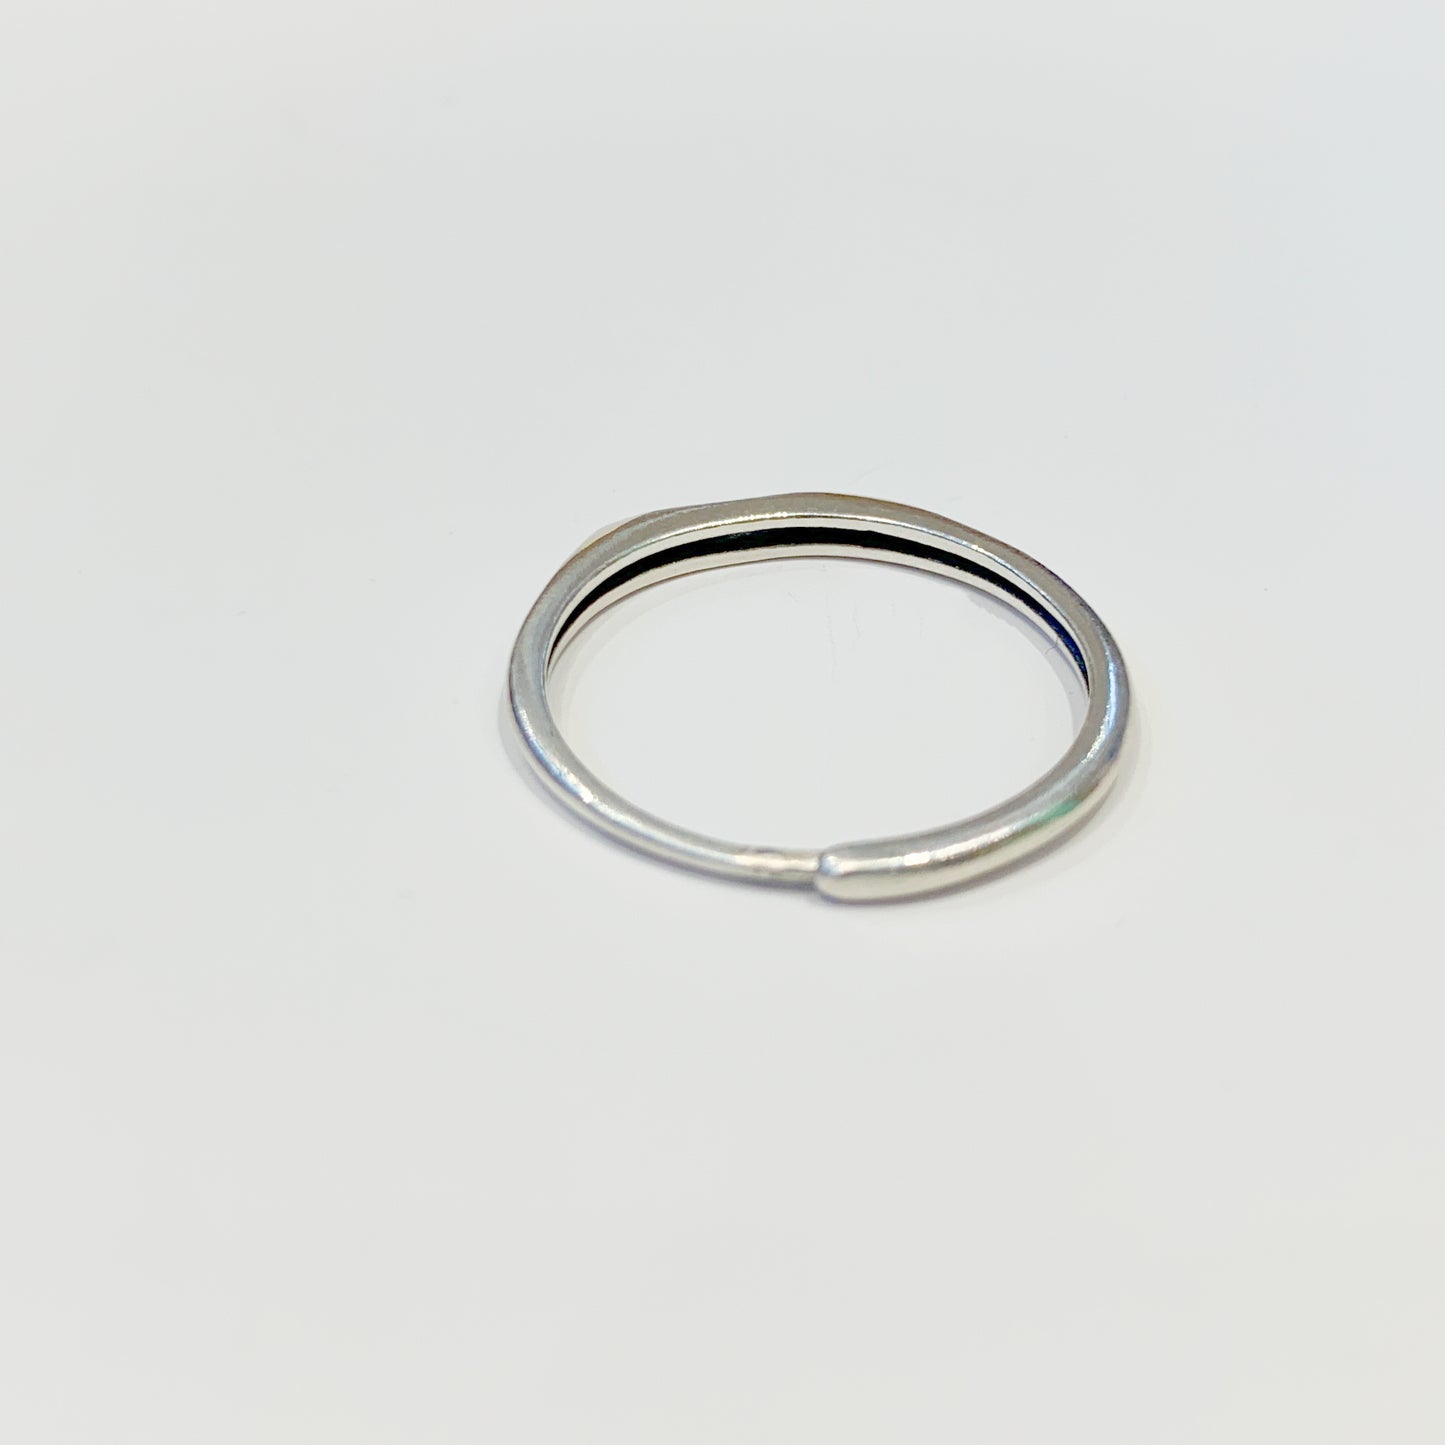 Silver flat adjustable ring